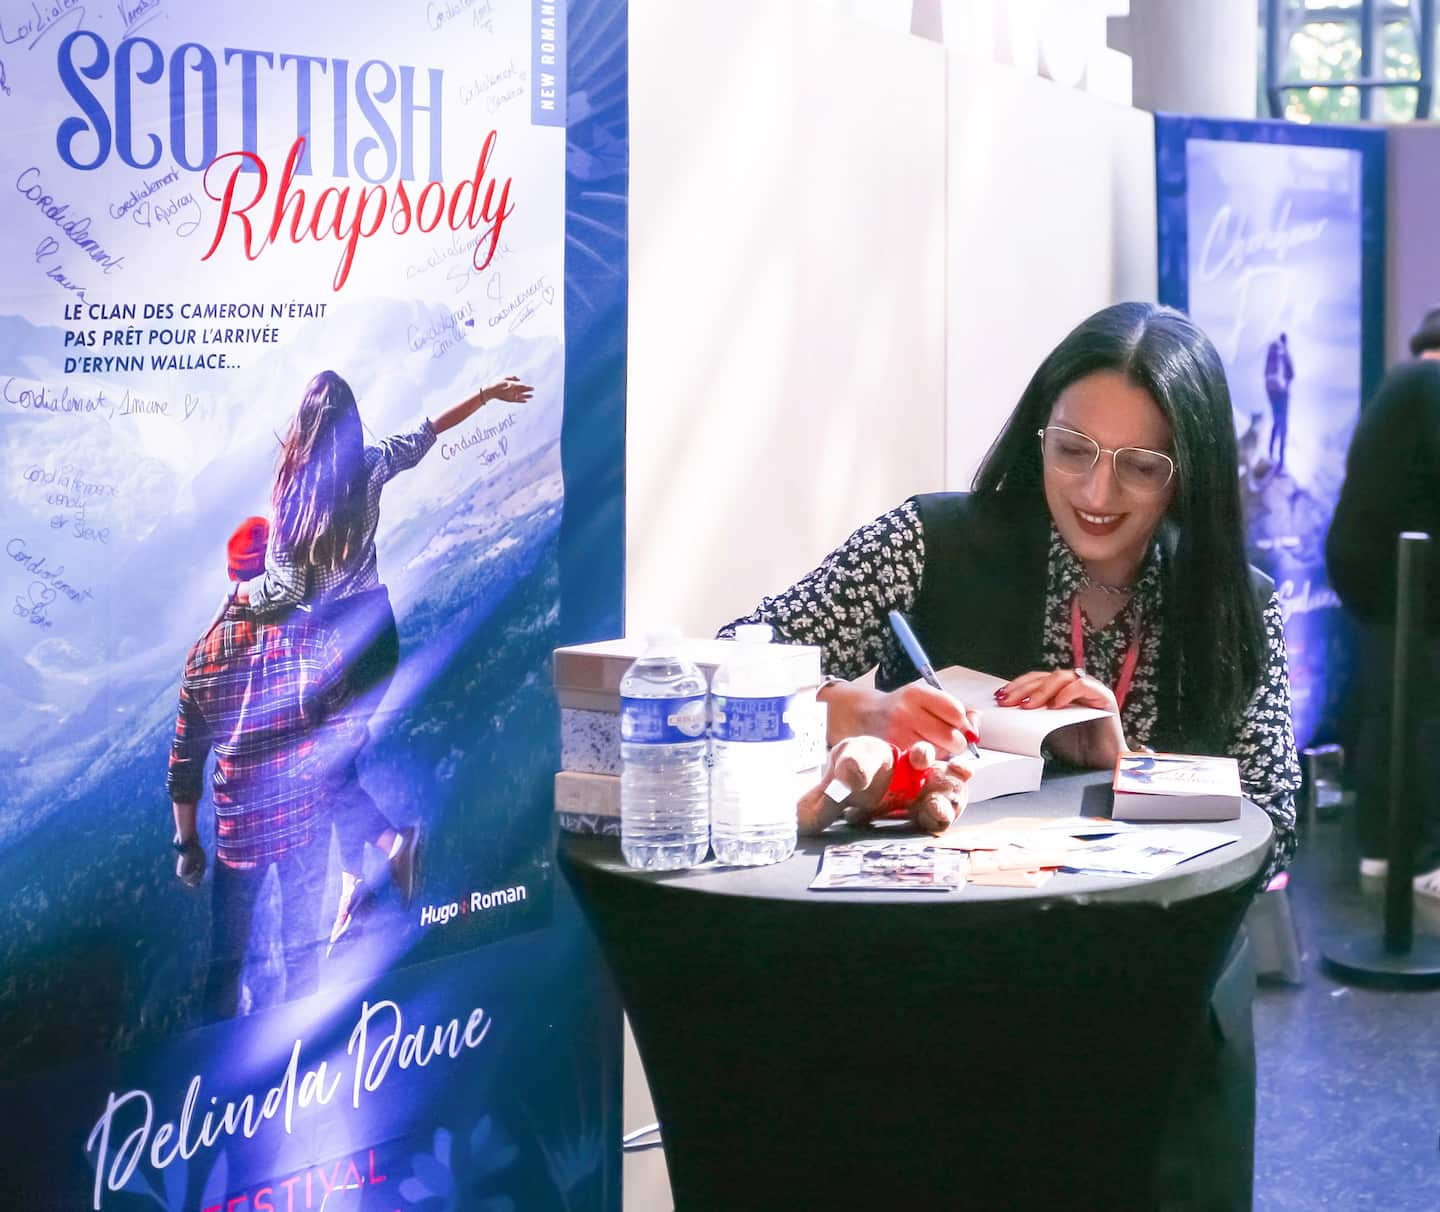 New novel by Delinda Dane: romantic adventure in the heart of Scotland